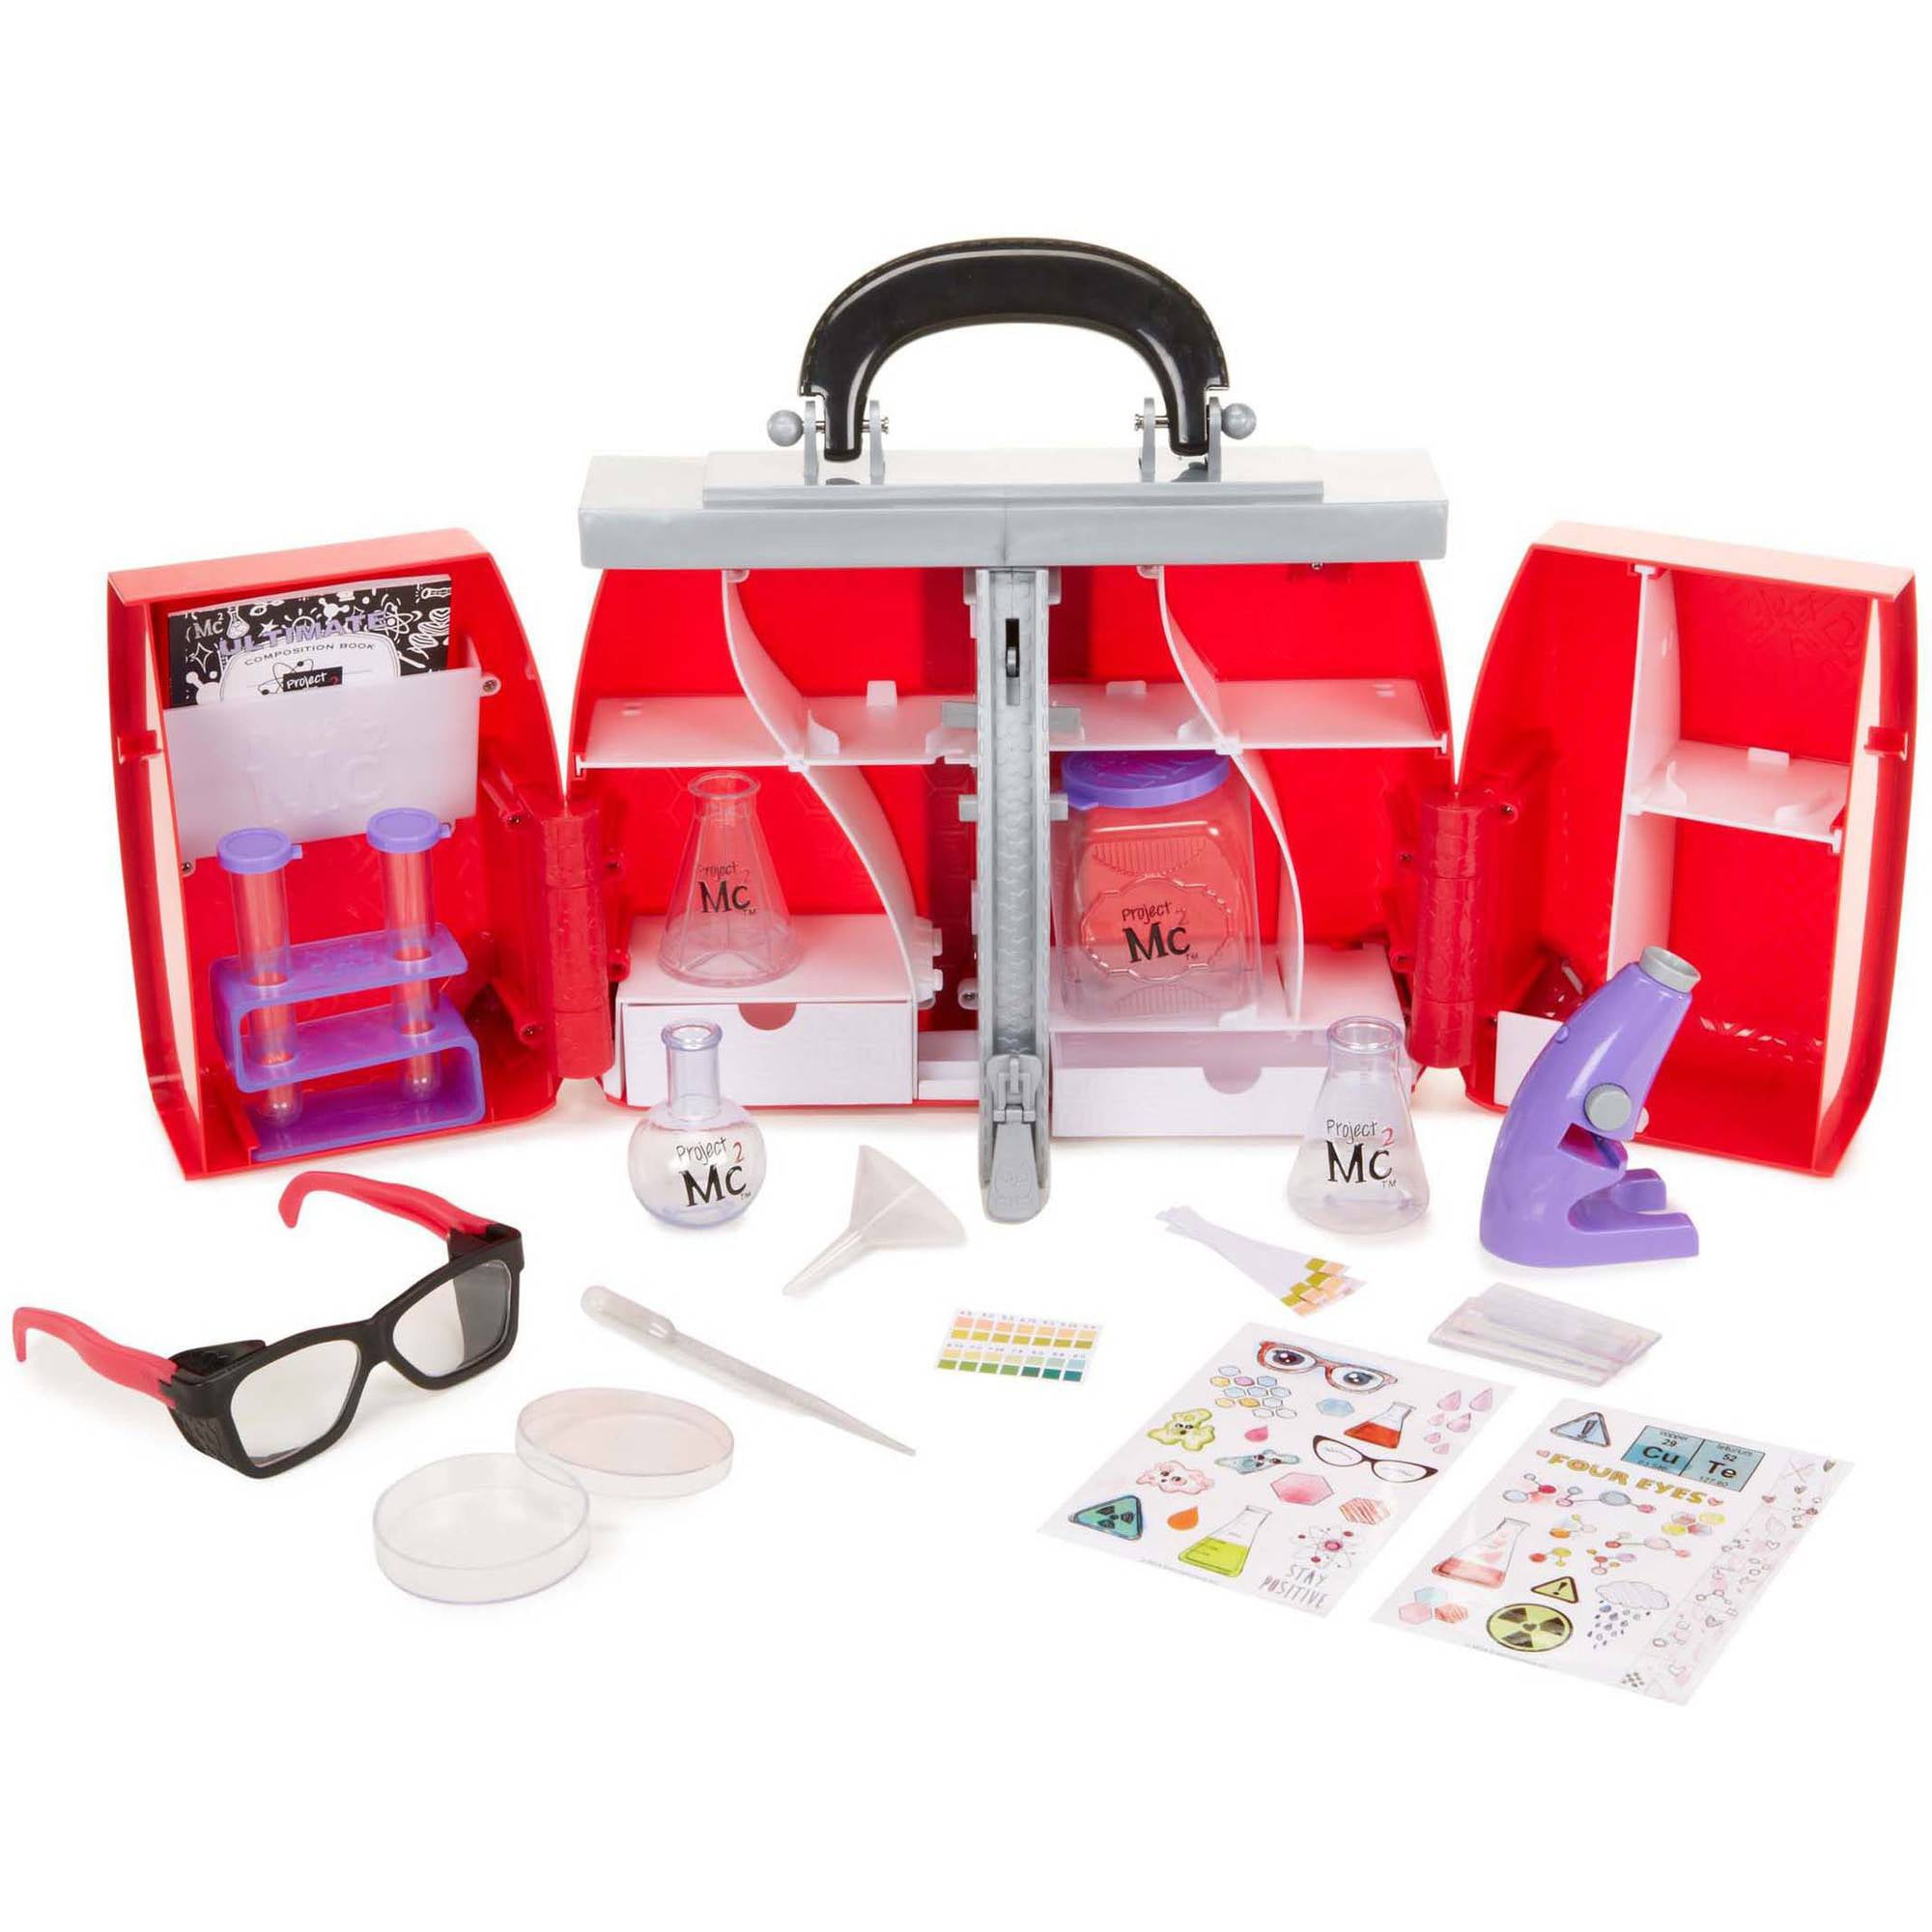 science lab kit for kids